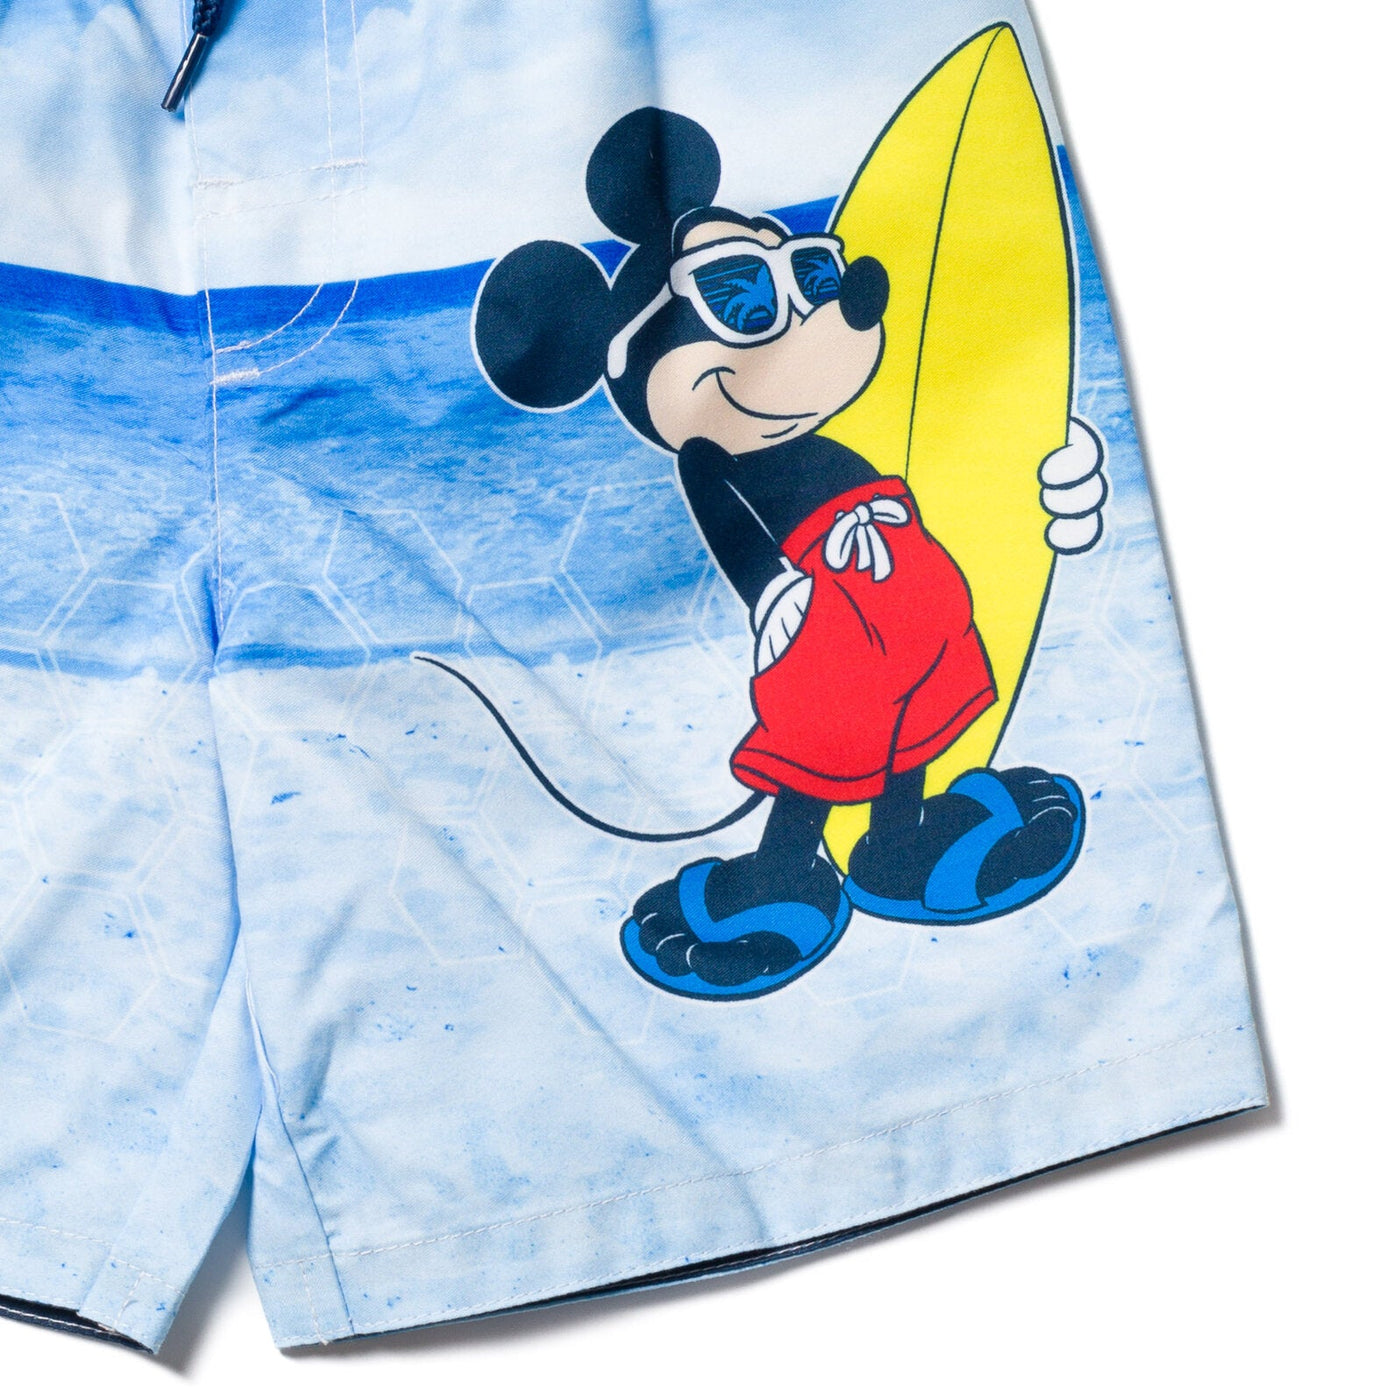 Disney Mickey Mouse UPF 50+ Swim Trunks Bathing Suit - imagikids